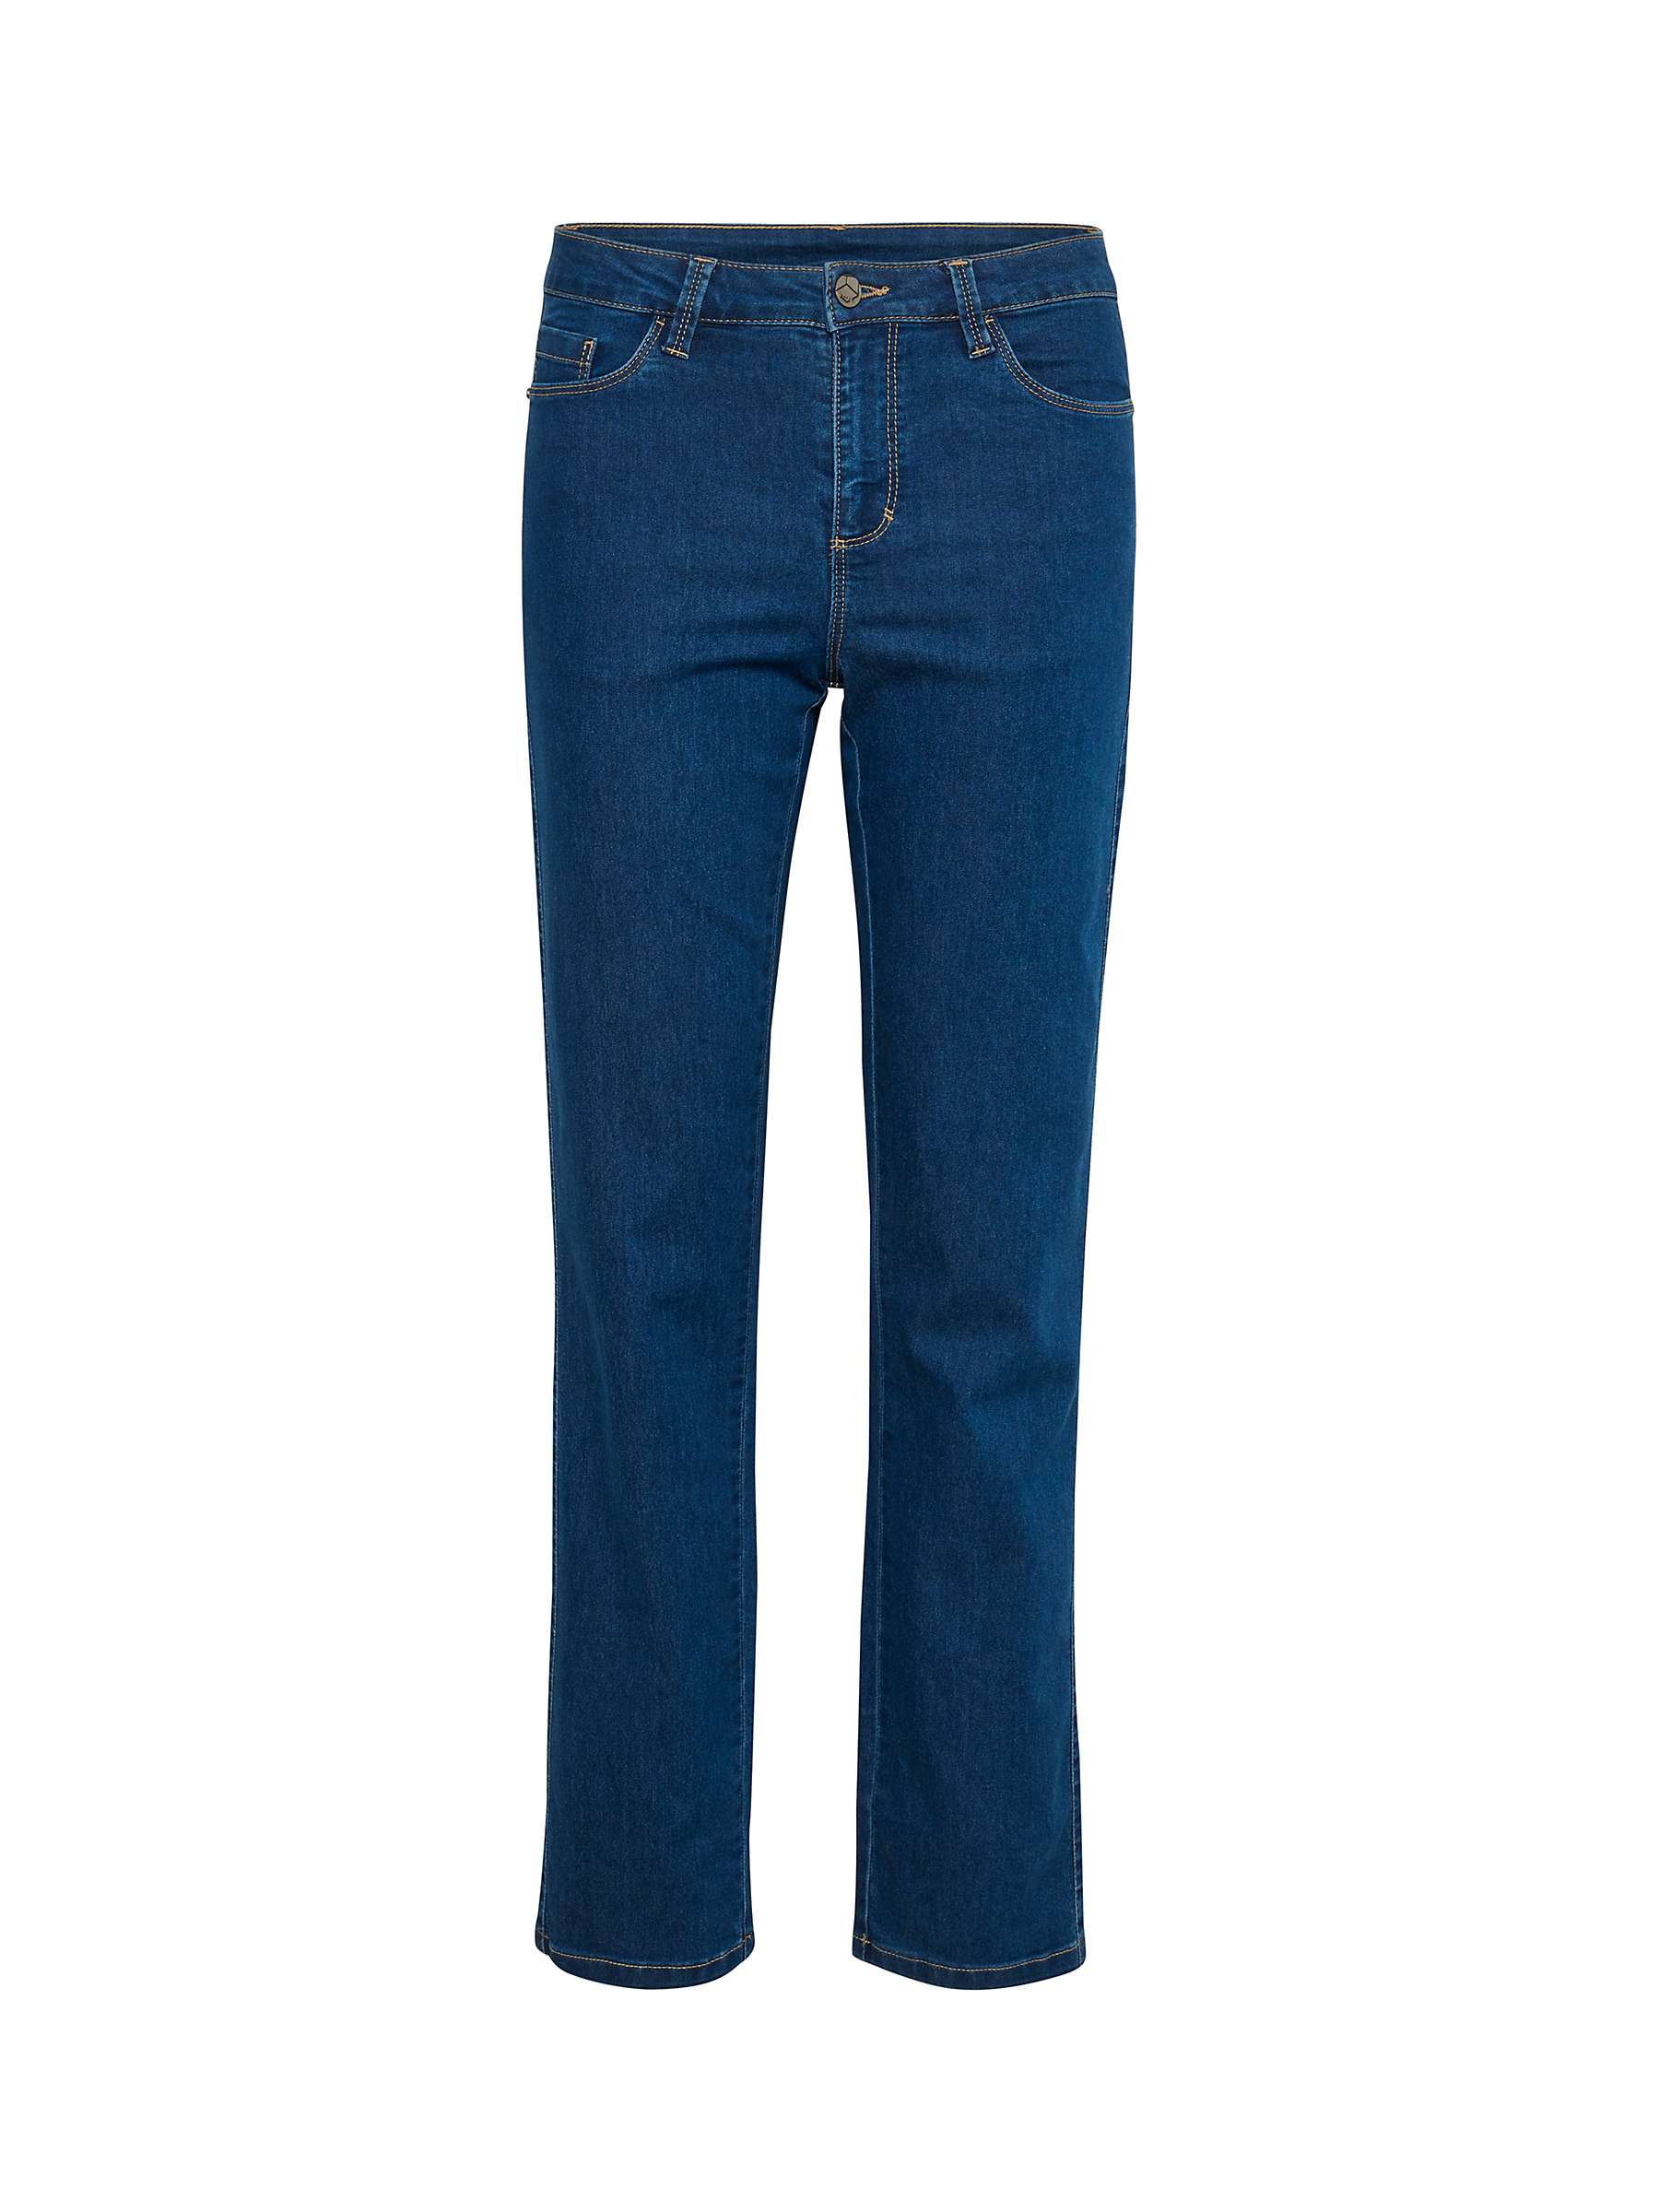 KAFFE Vicky Straight Leg Jeans, Blue Washed Denim at John Lewis & Partners